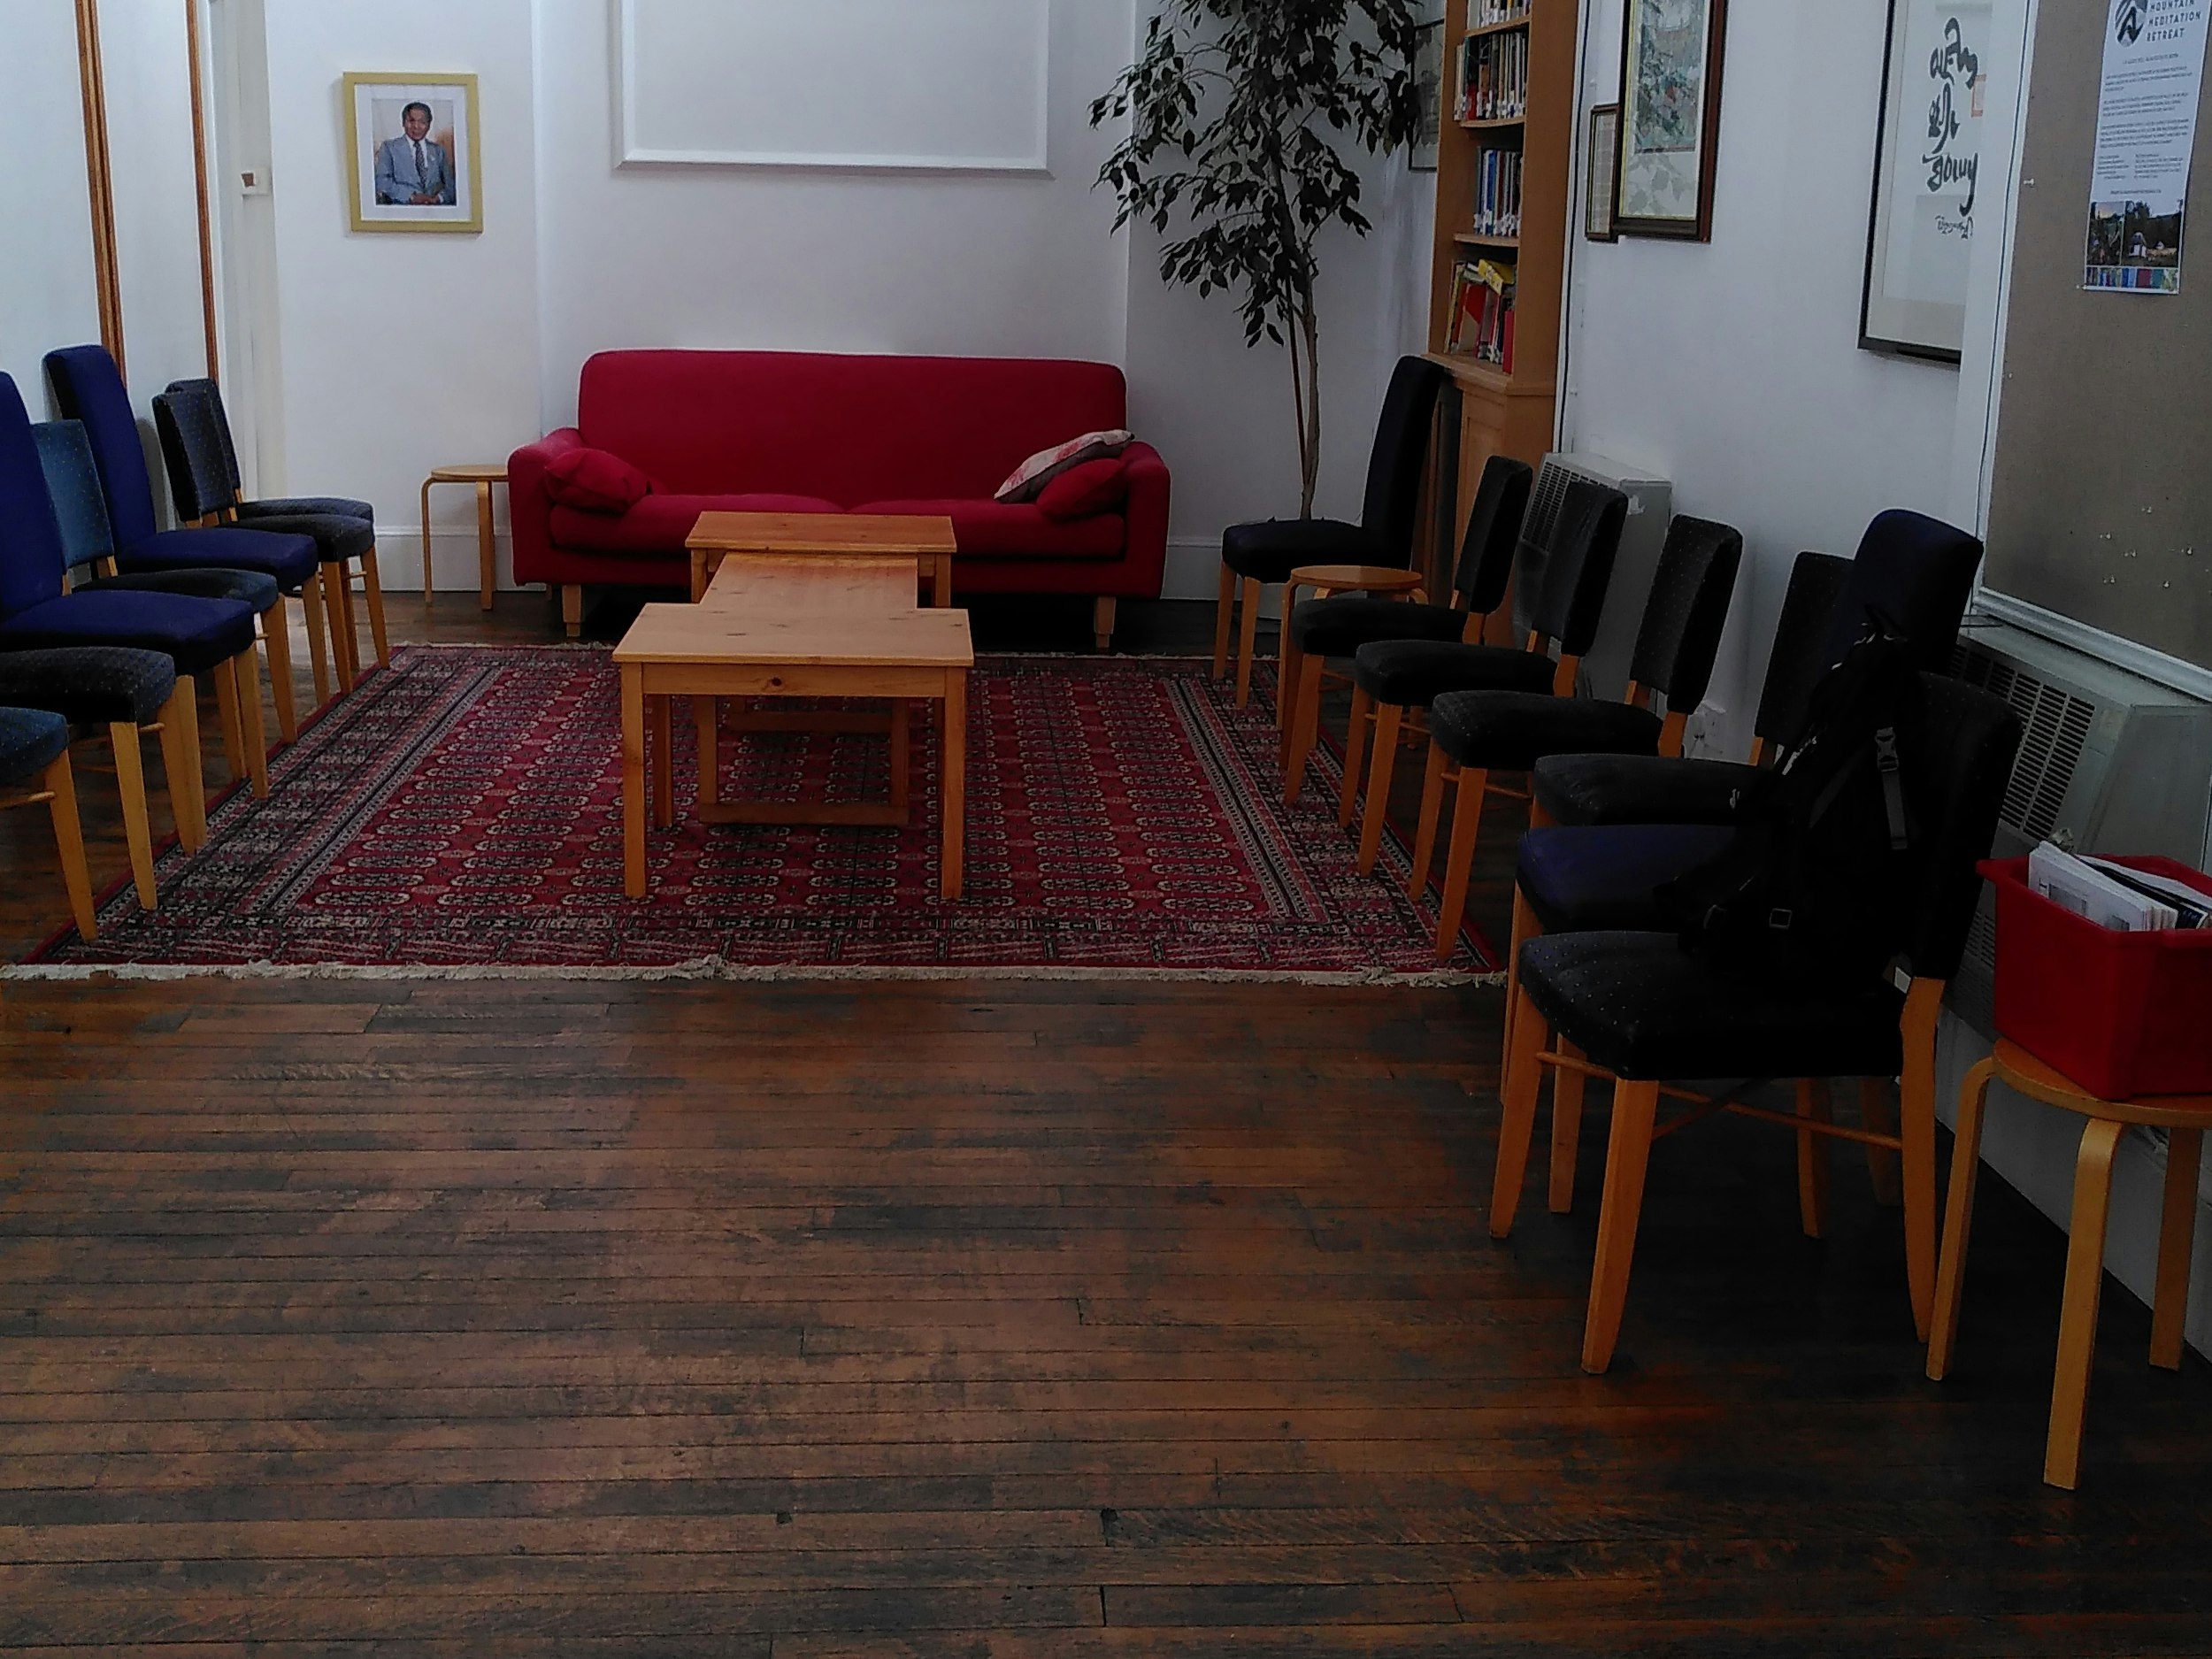 London Shambhala Meditation Centre - Main Hall image 1